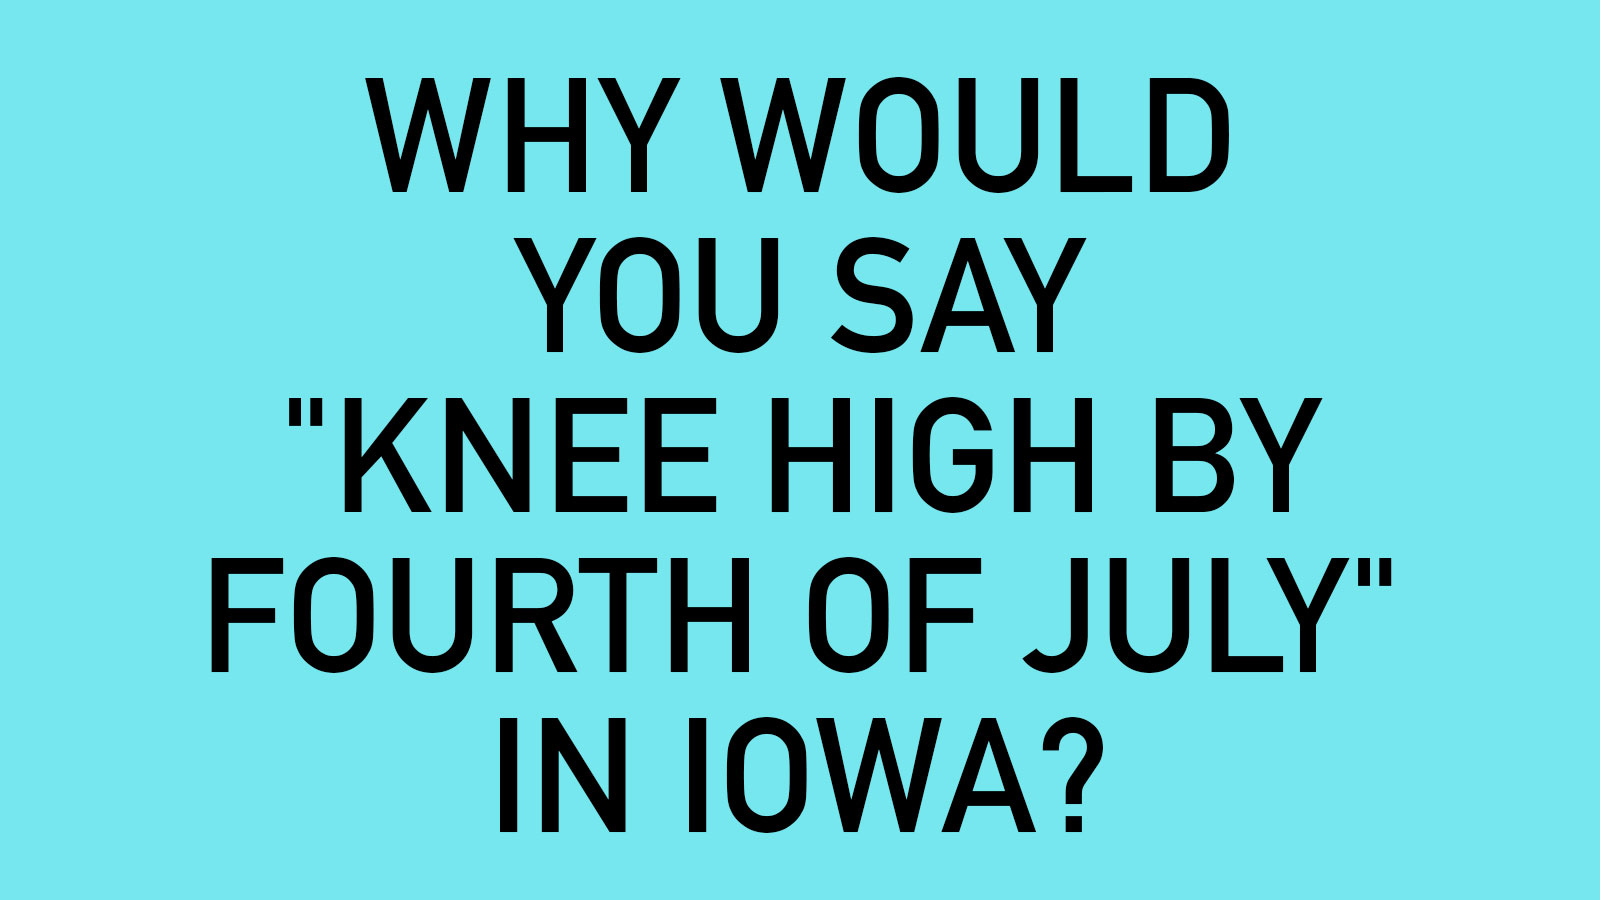 How Well Do You Know Iowa Slang? 816